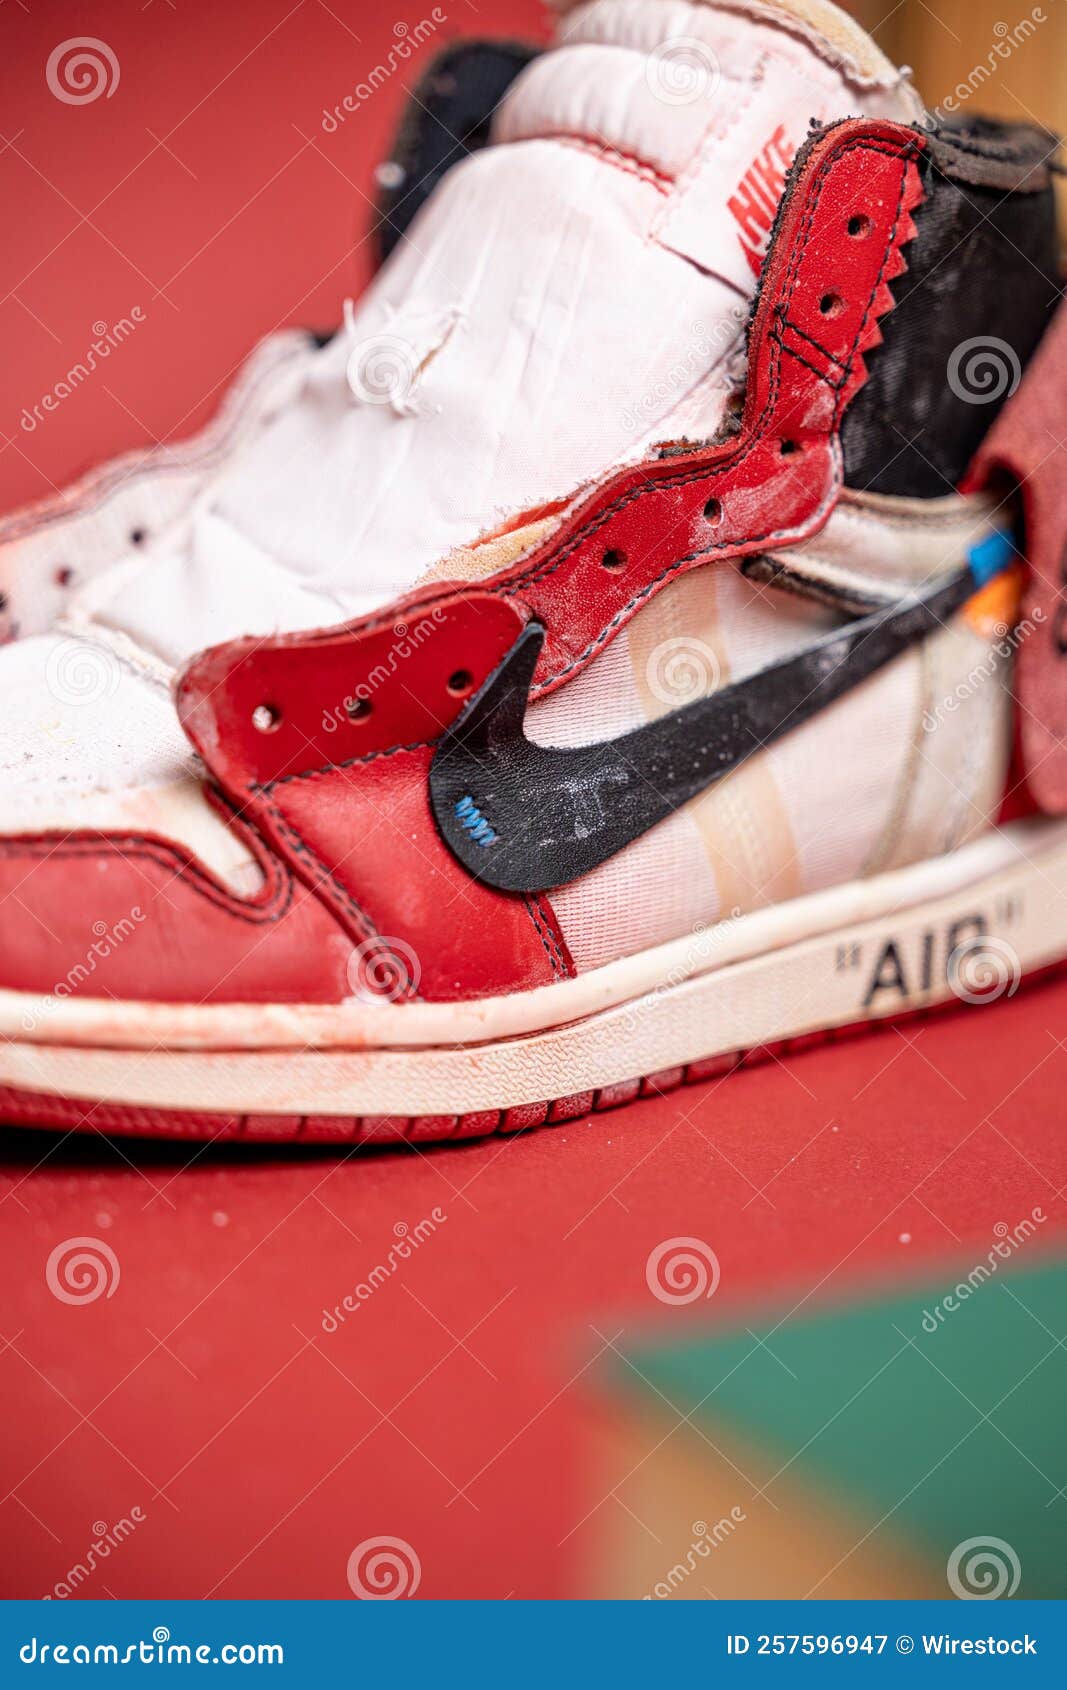 baño Baño Sala Red Air Jordan 1 Off White from Nike. the Ten Air Jordan 1. Closeup of Nike  Air Jordan 1. Editorial Photography - Image of shoes, basketball: 257596947